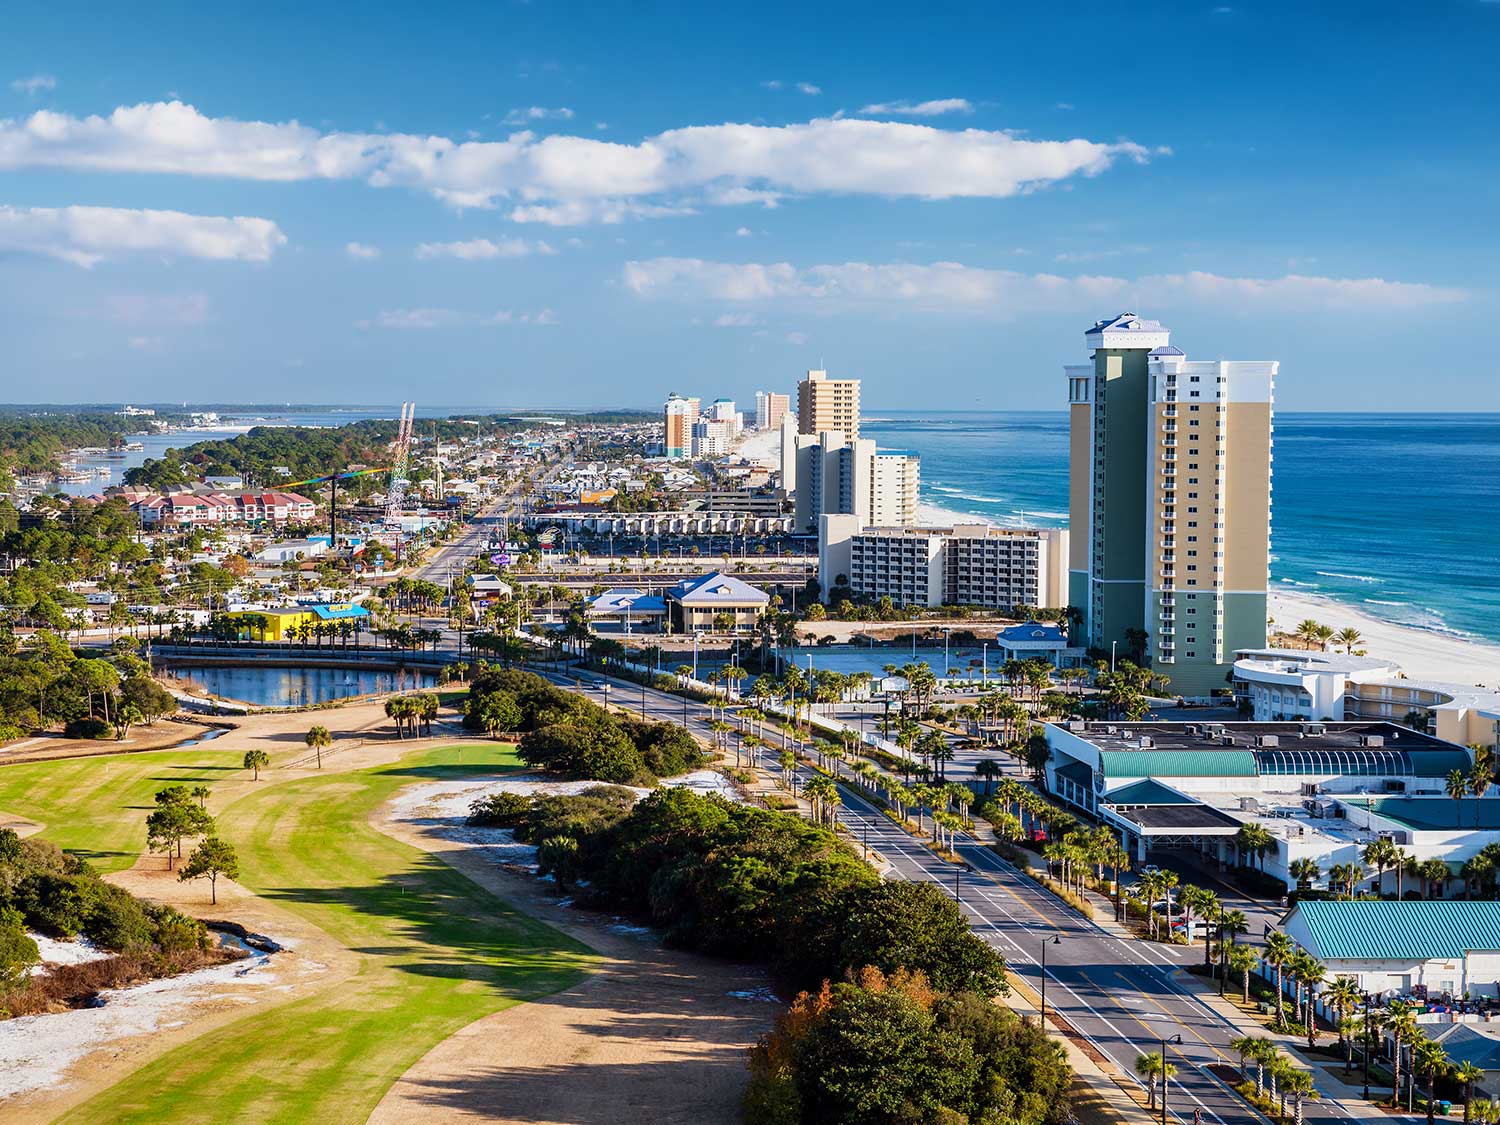 An aerial photograph of Panama City Florida.